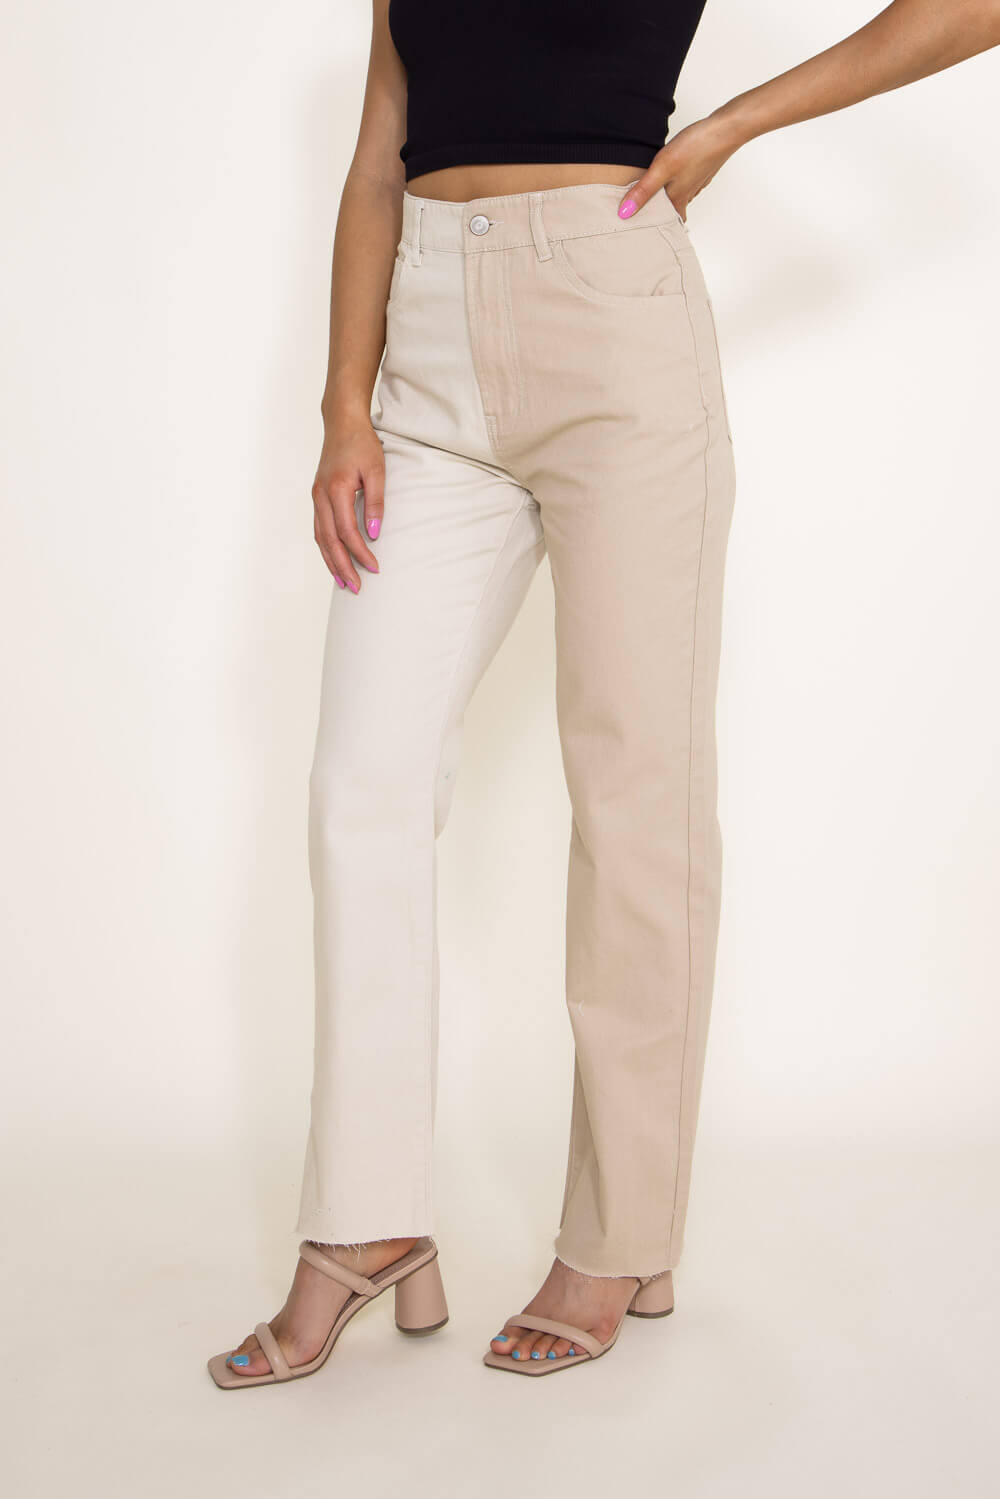 Beige Side Zip Lycra | Buy Side Zip trouser Pants Online